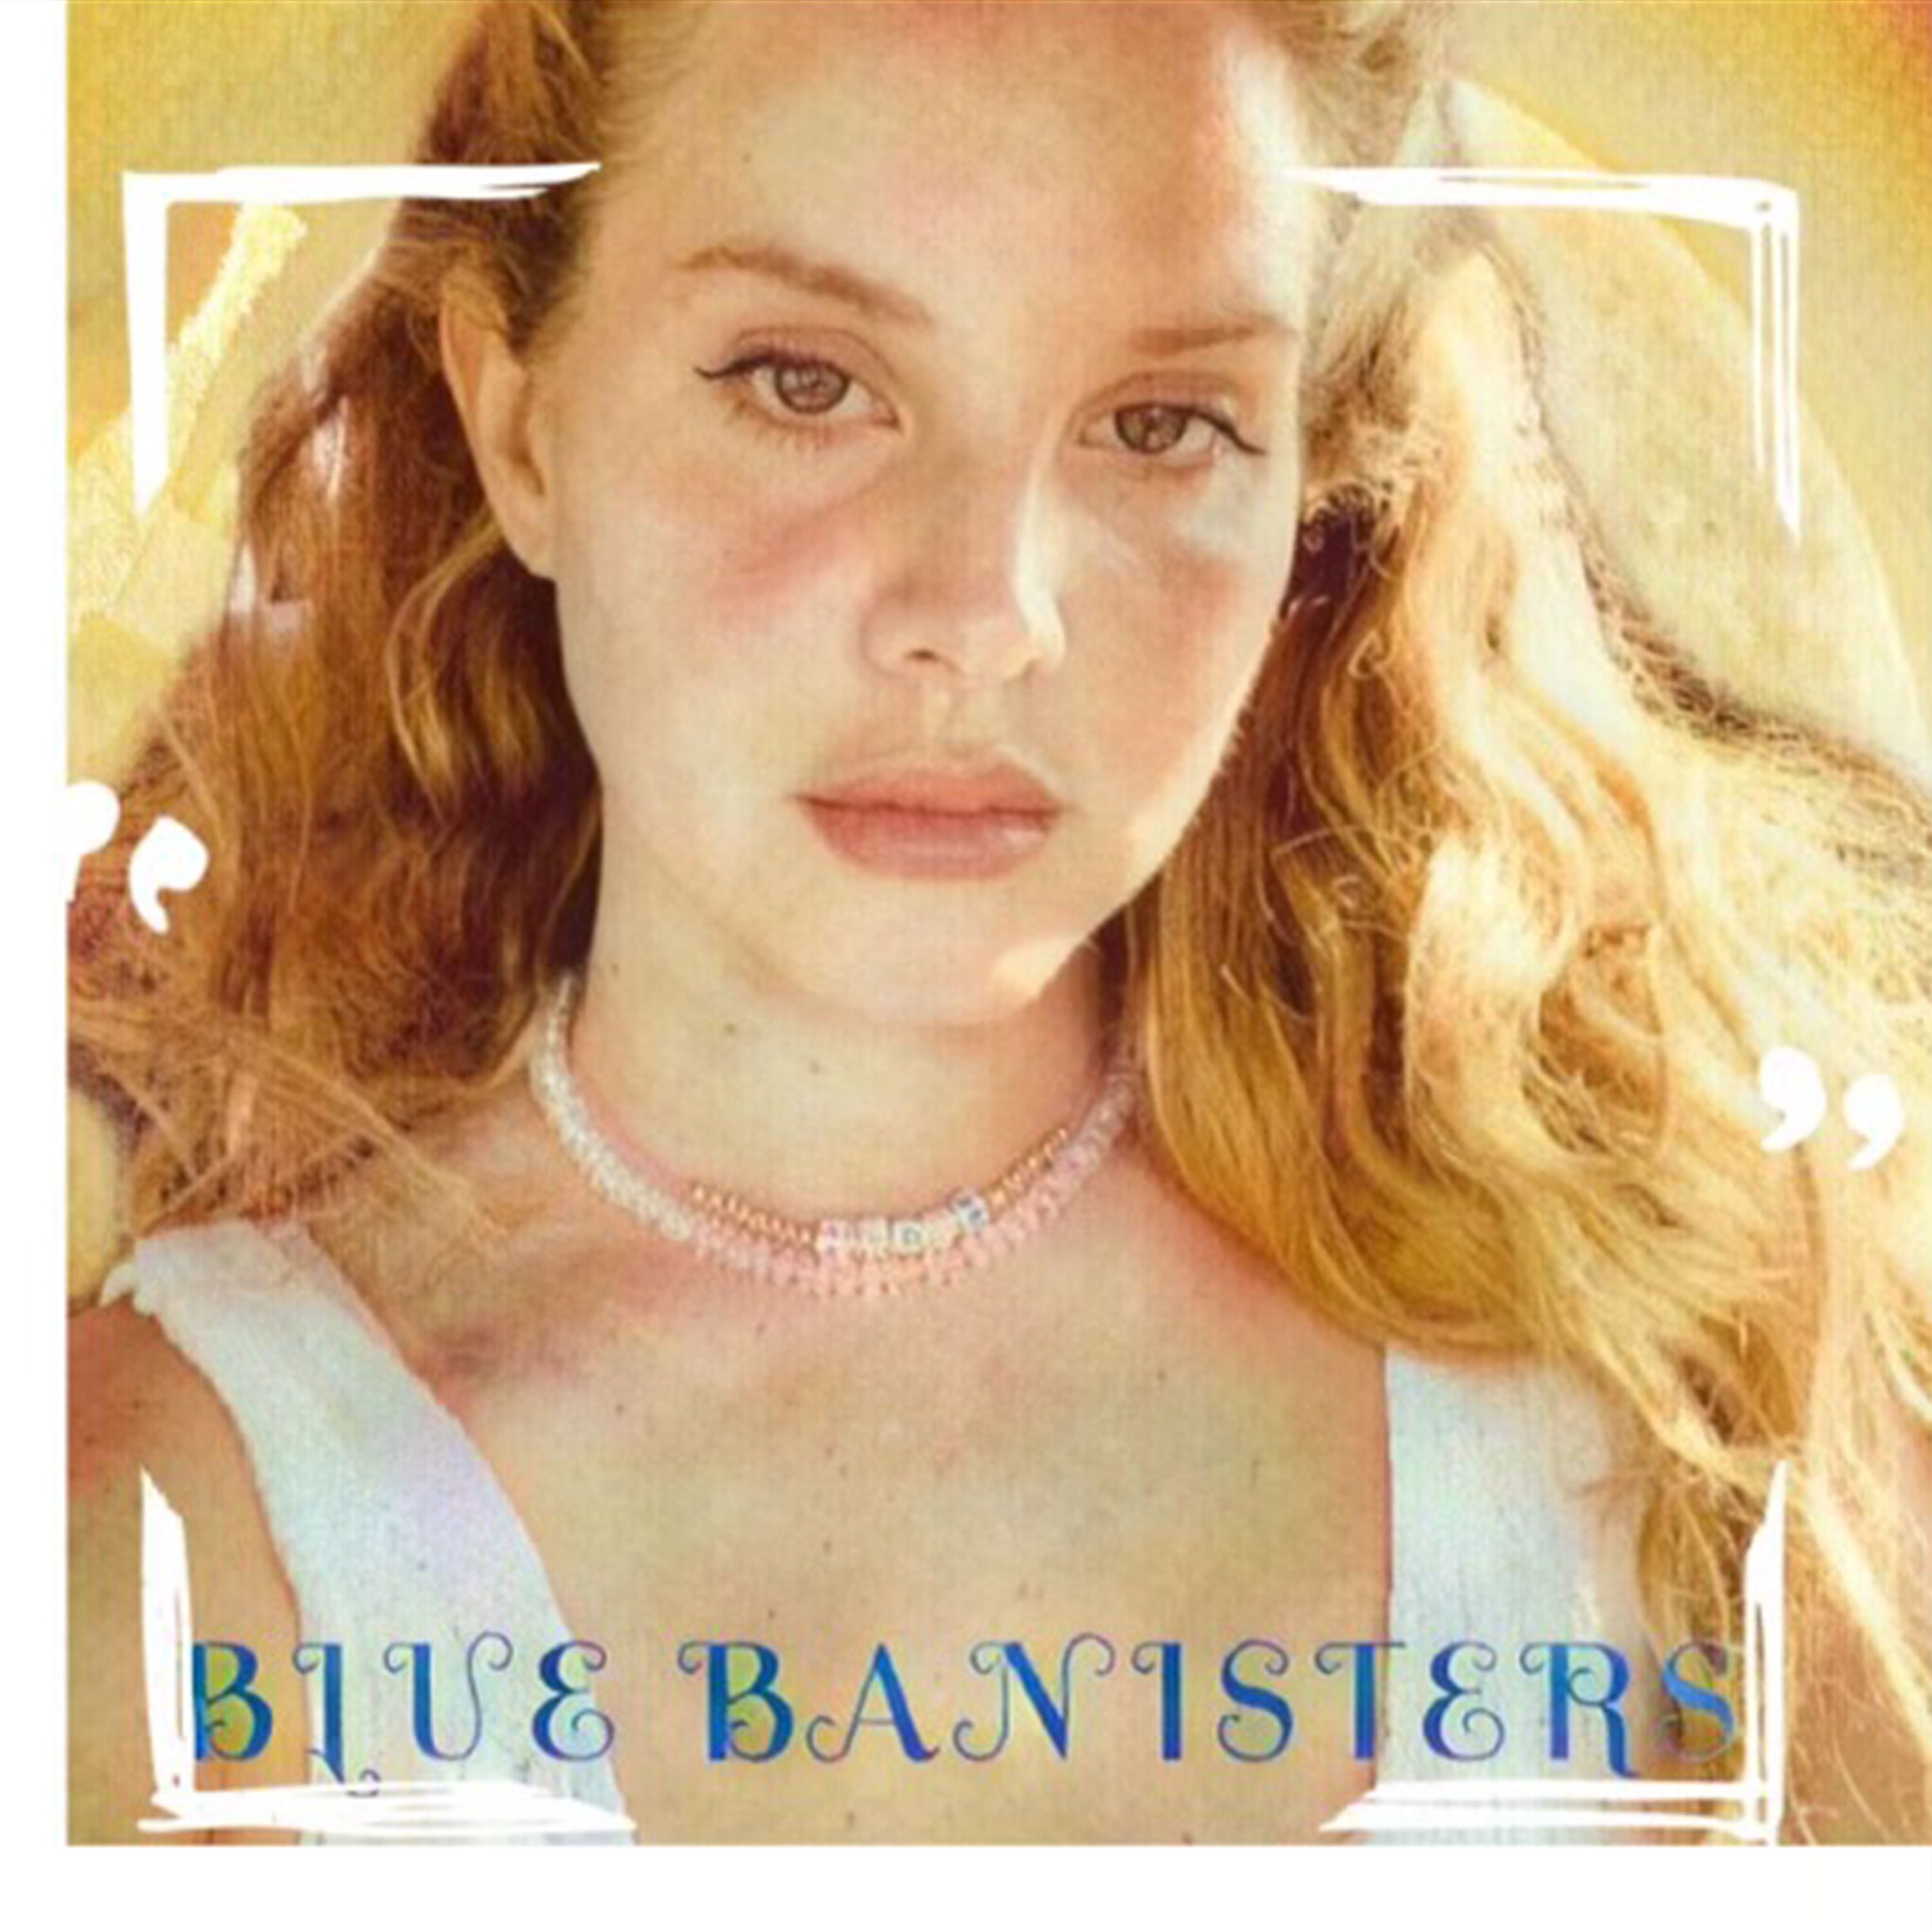 Blue_Banisters_-_Single.jpg